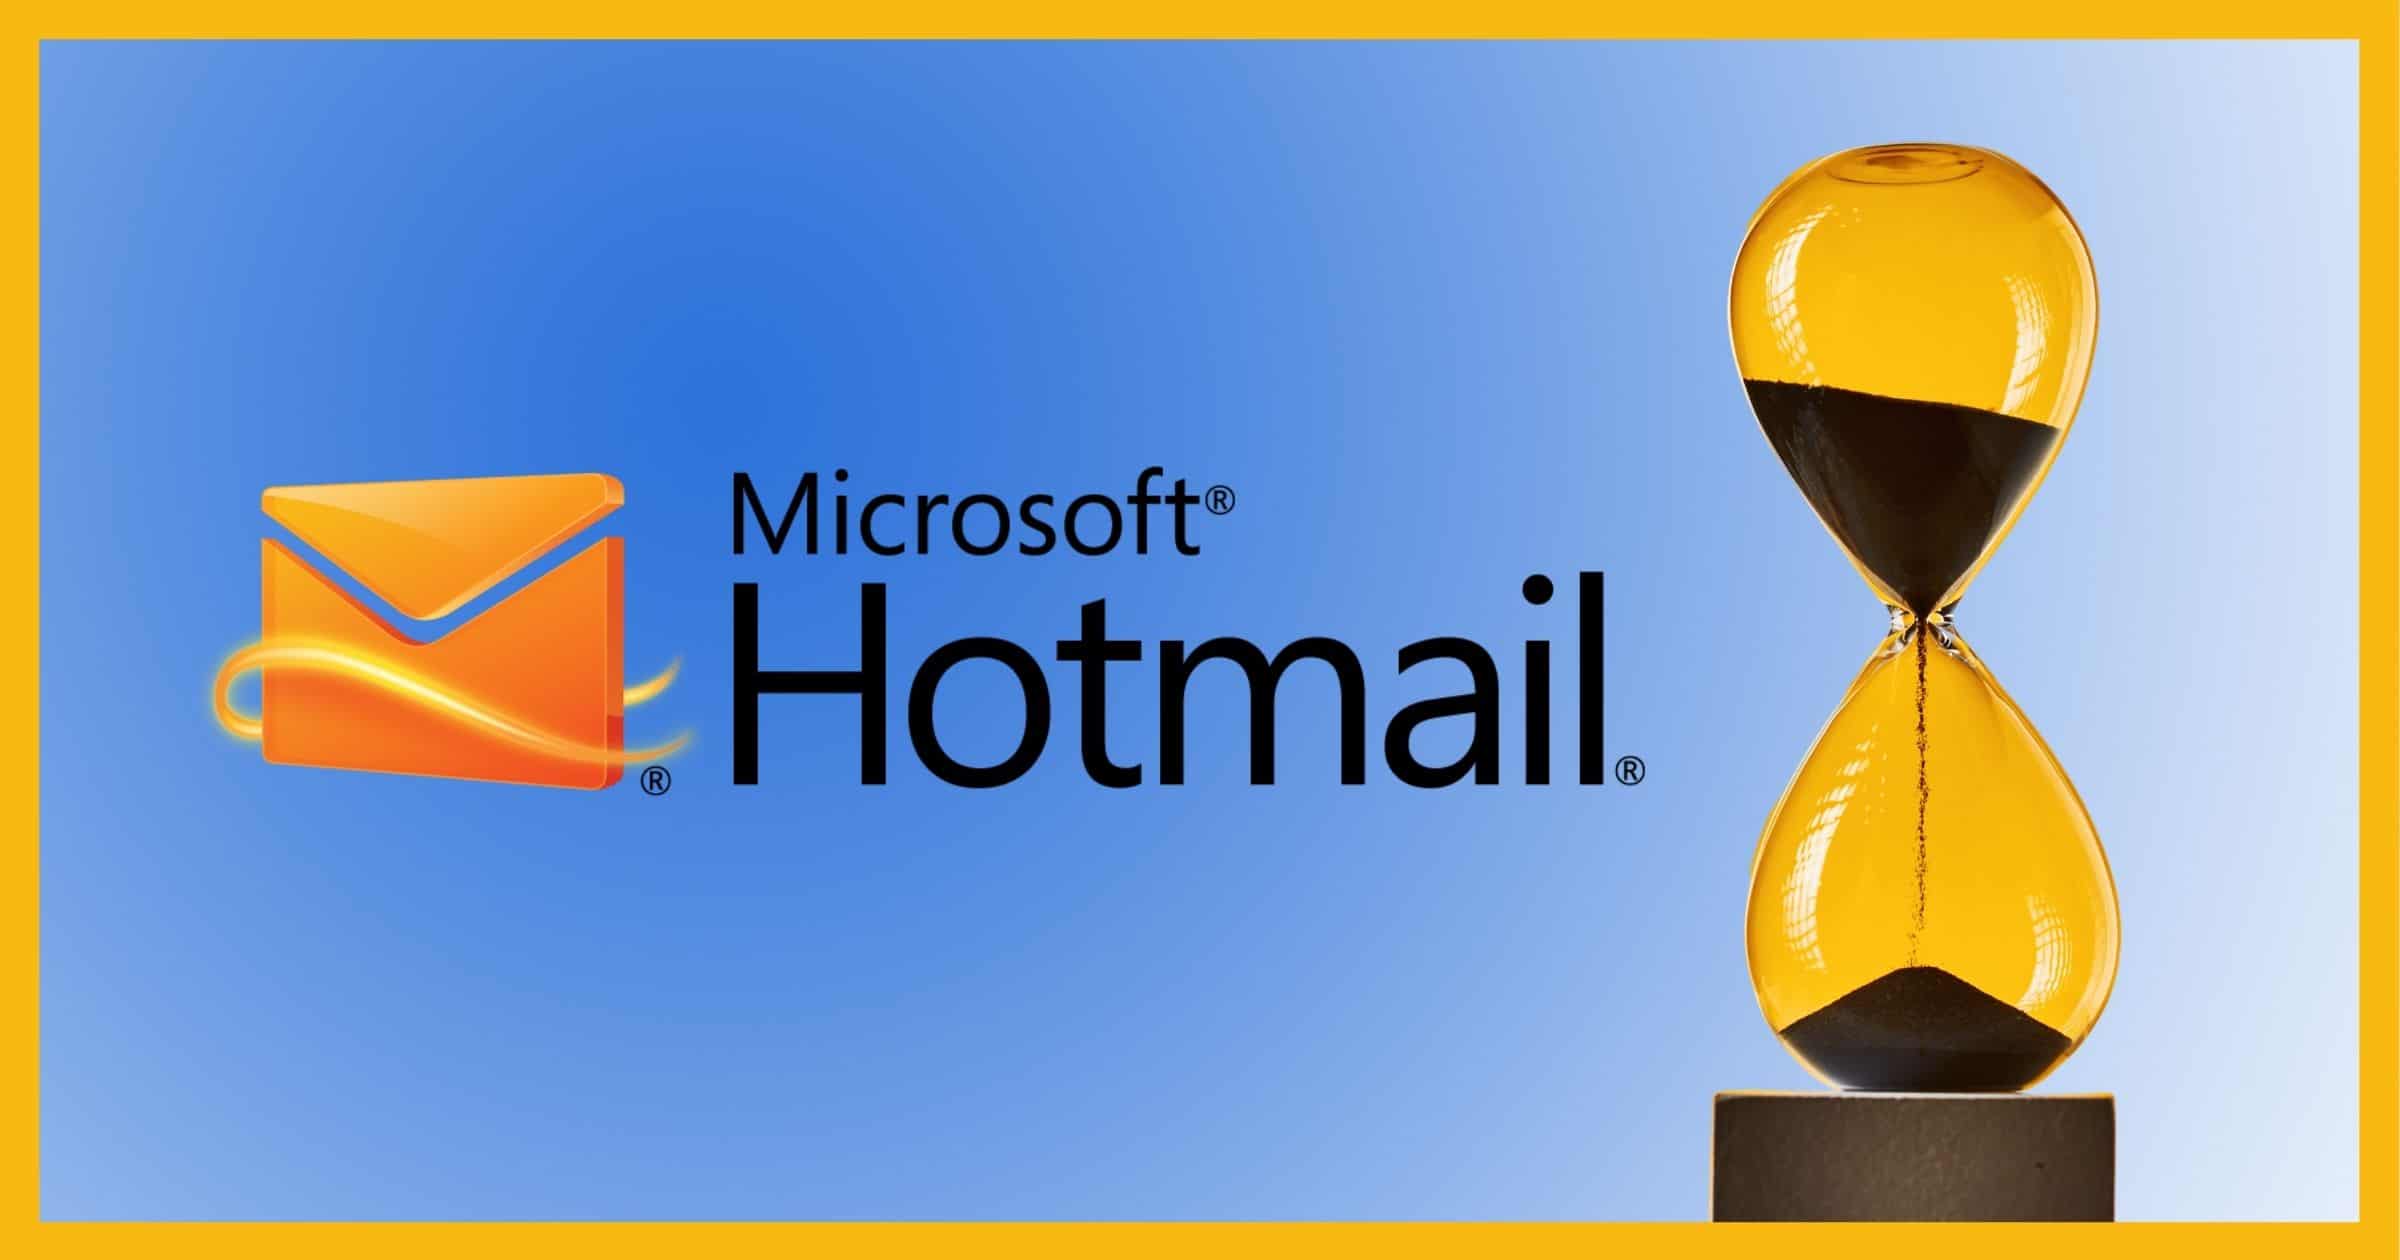 retrieve Hotmail login